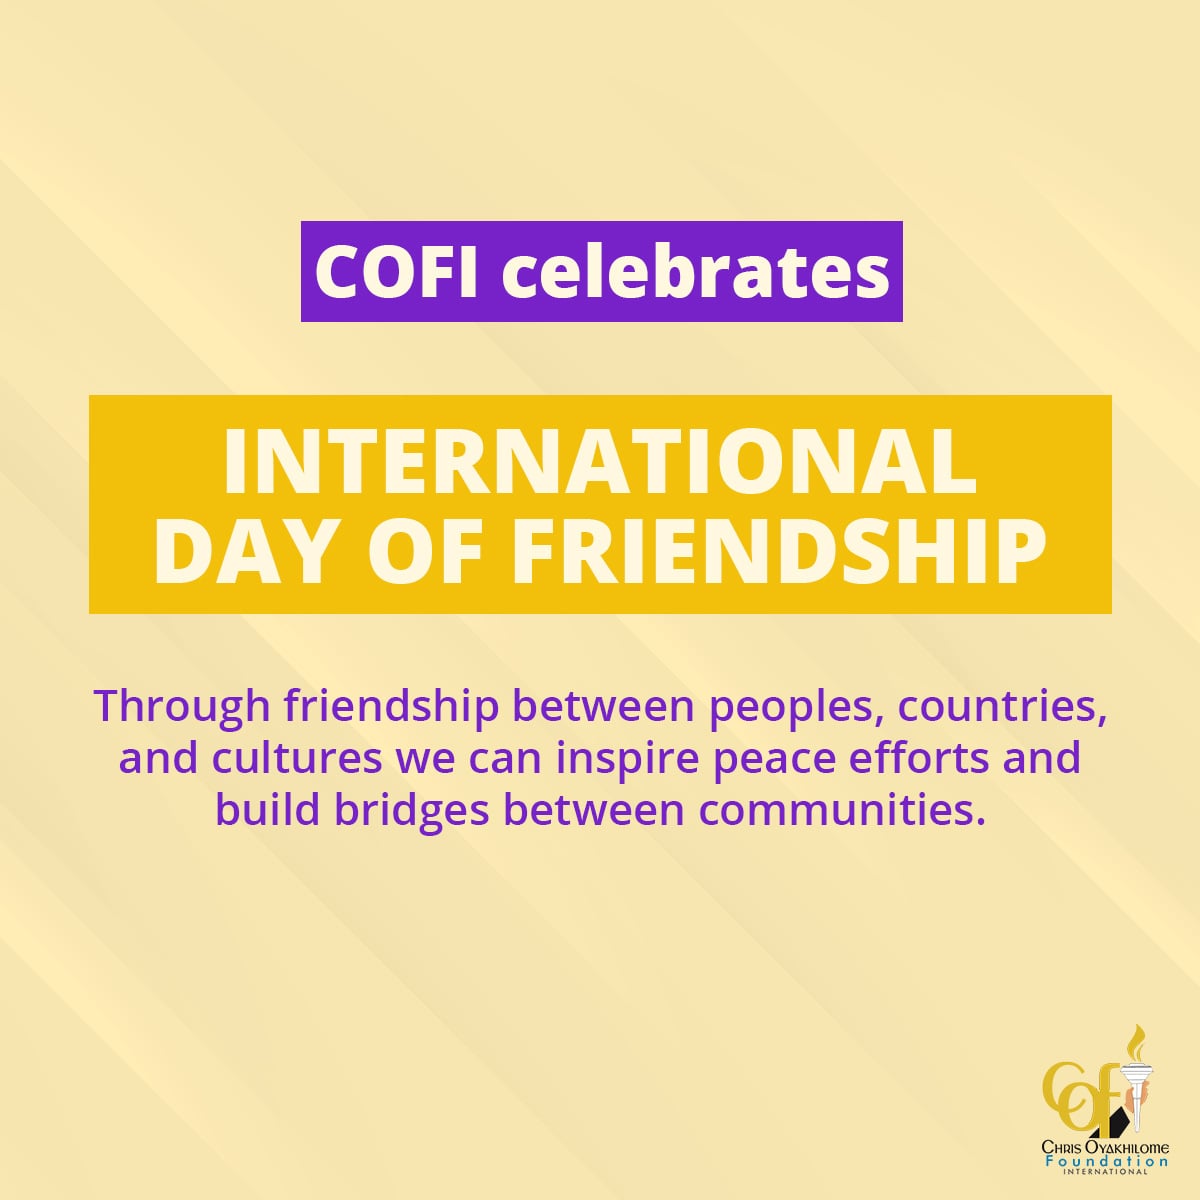 COFI Celebrates International Day of Friendship on the 30th of July